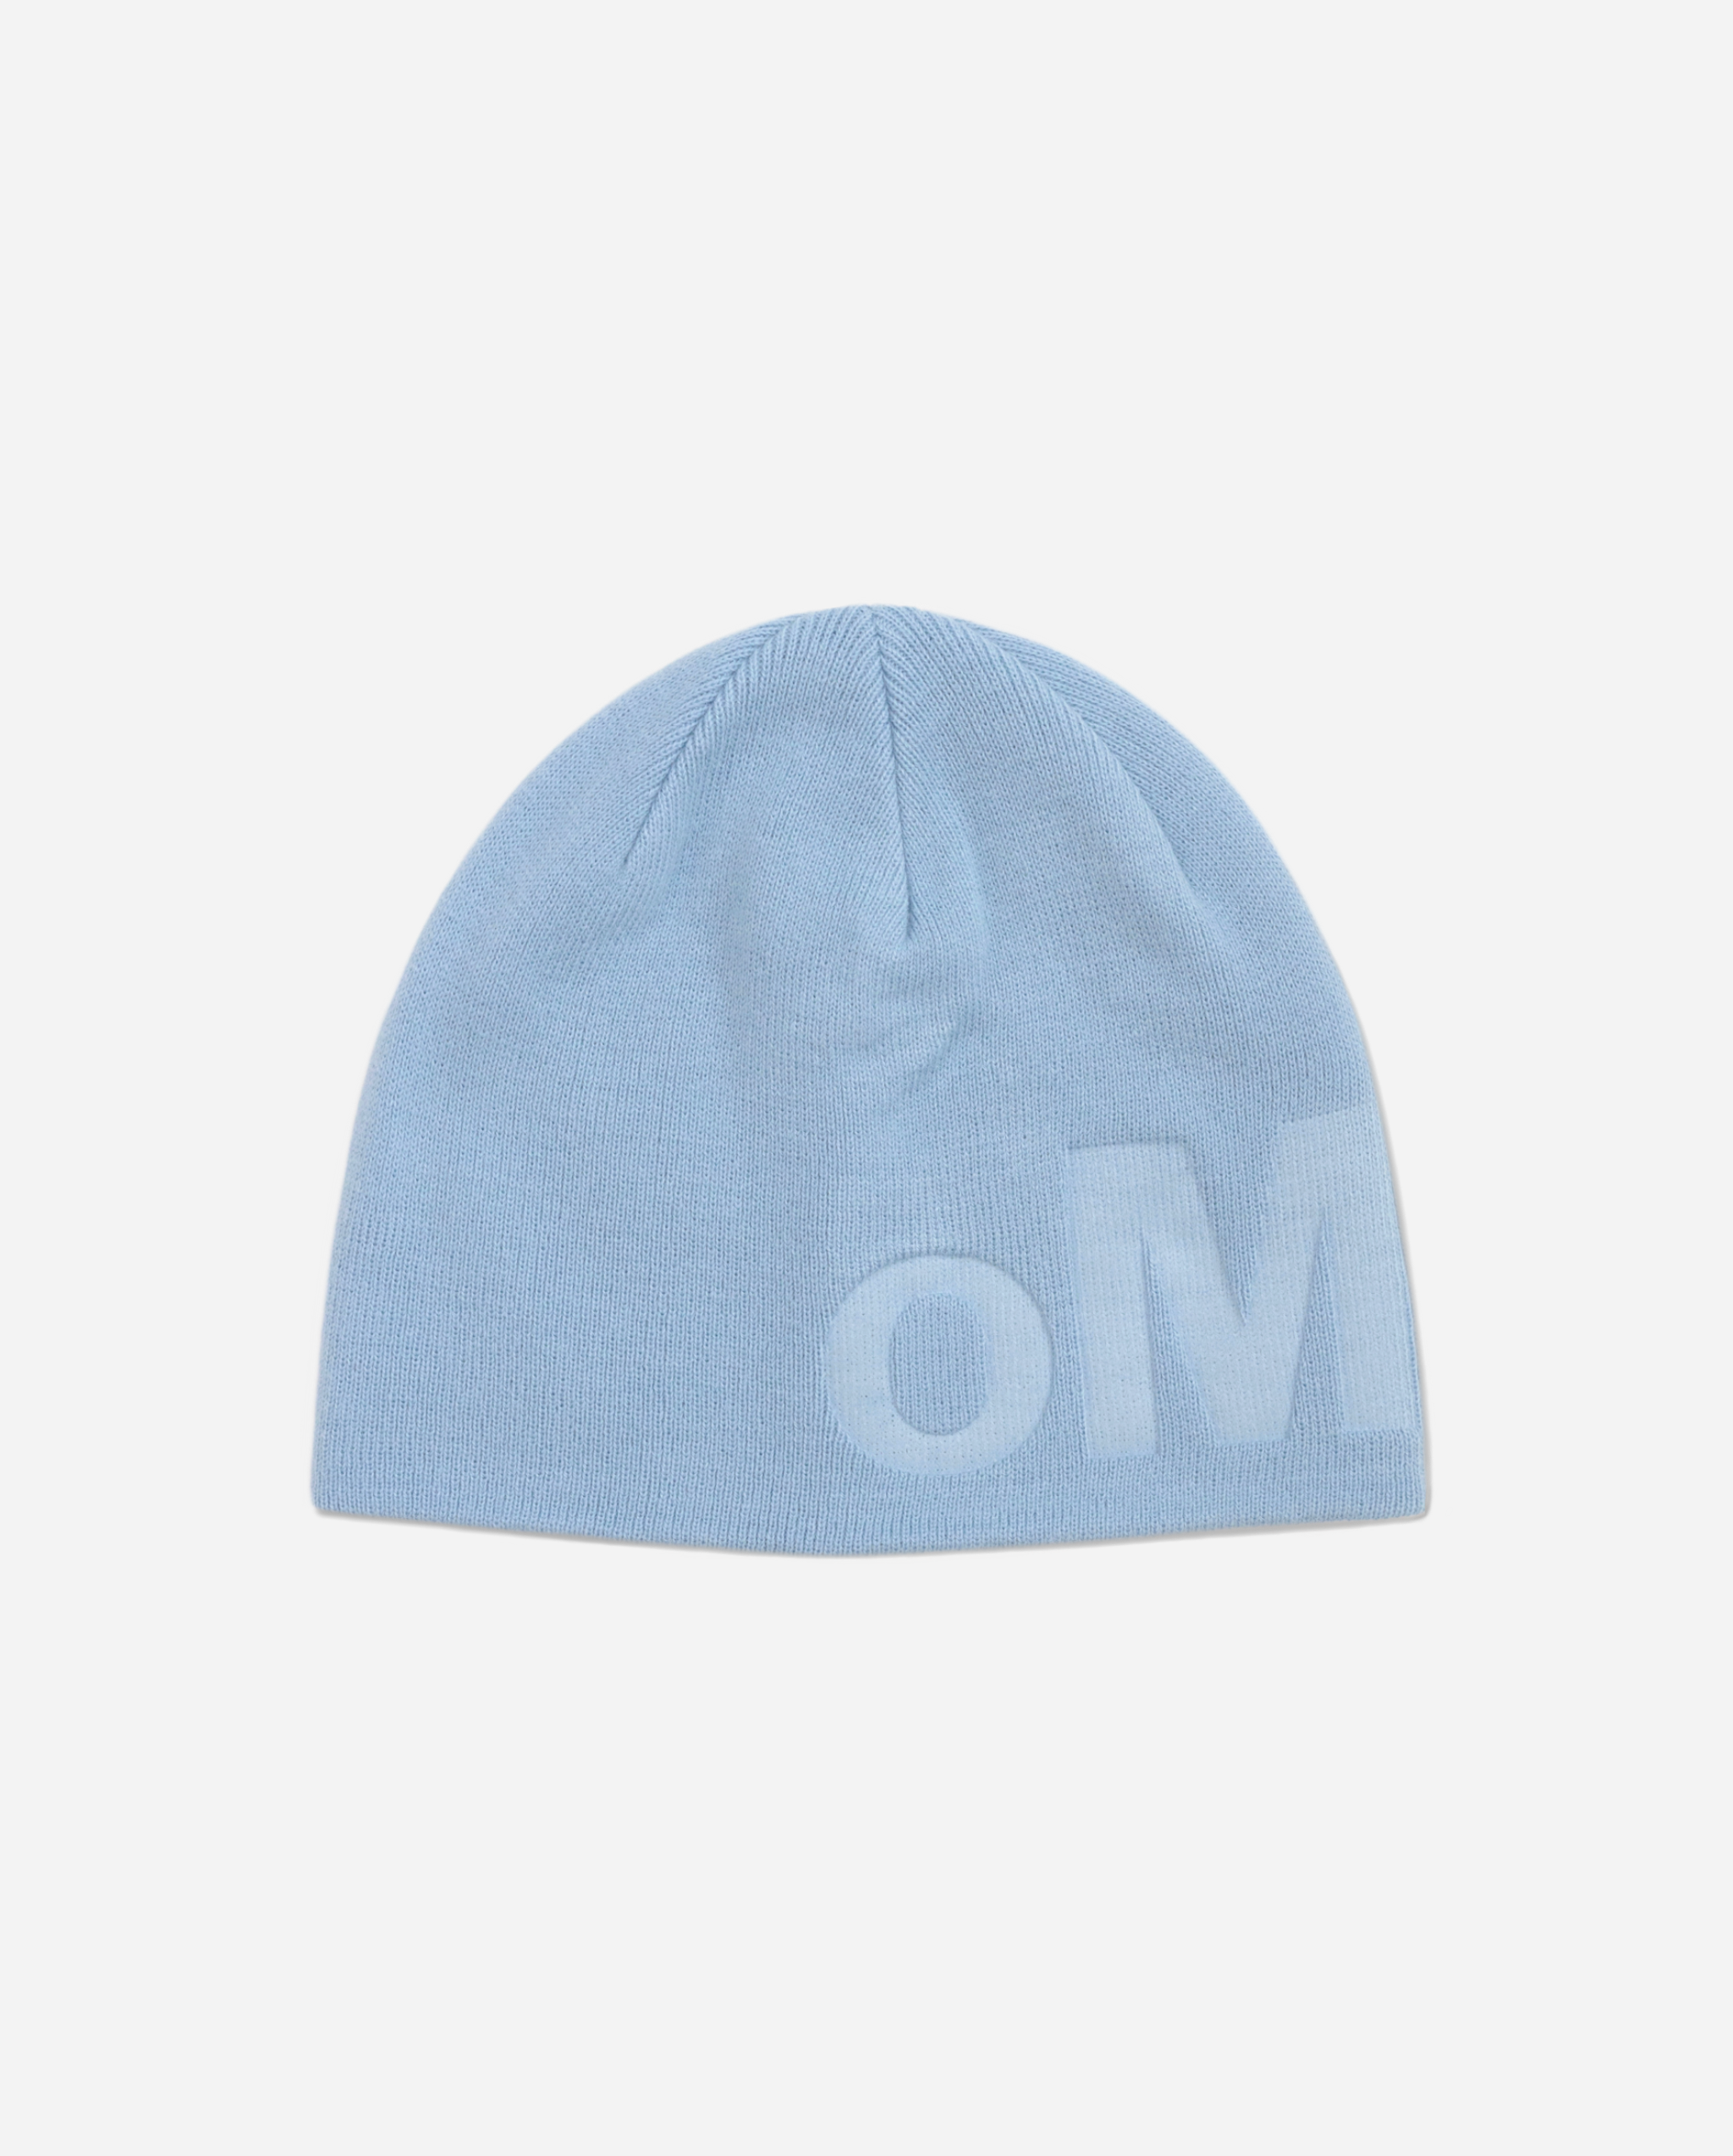 oMA EMBOSSED SKULL CAP (BABY BLUE)